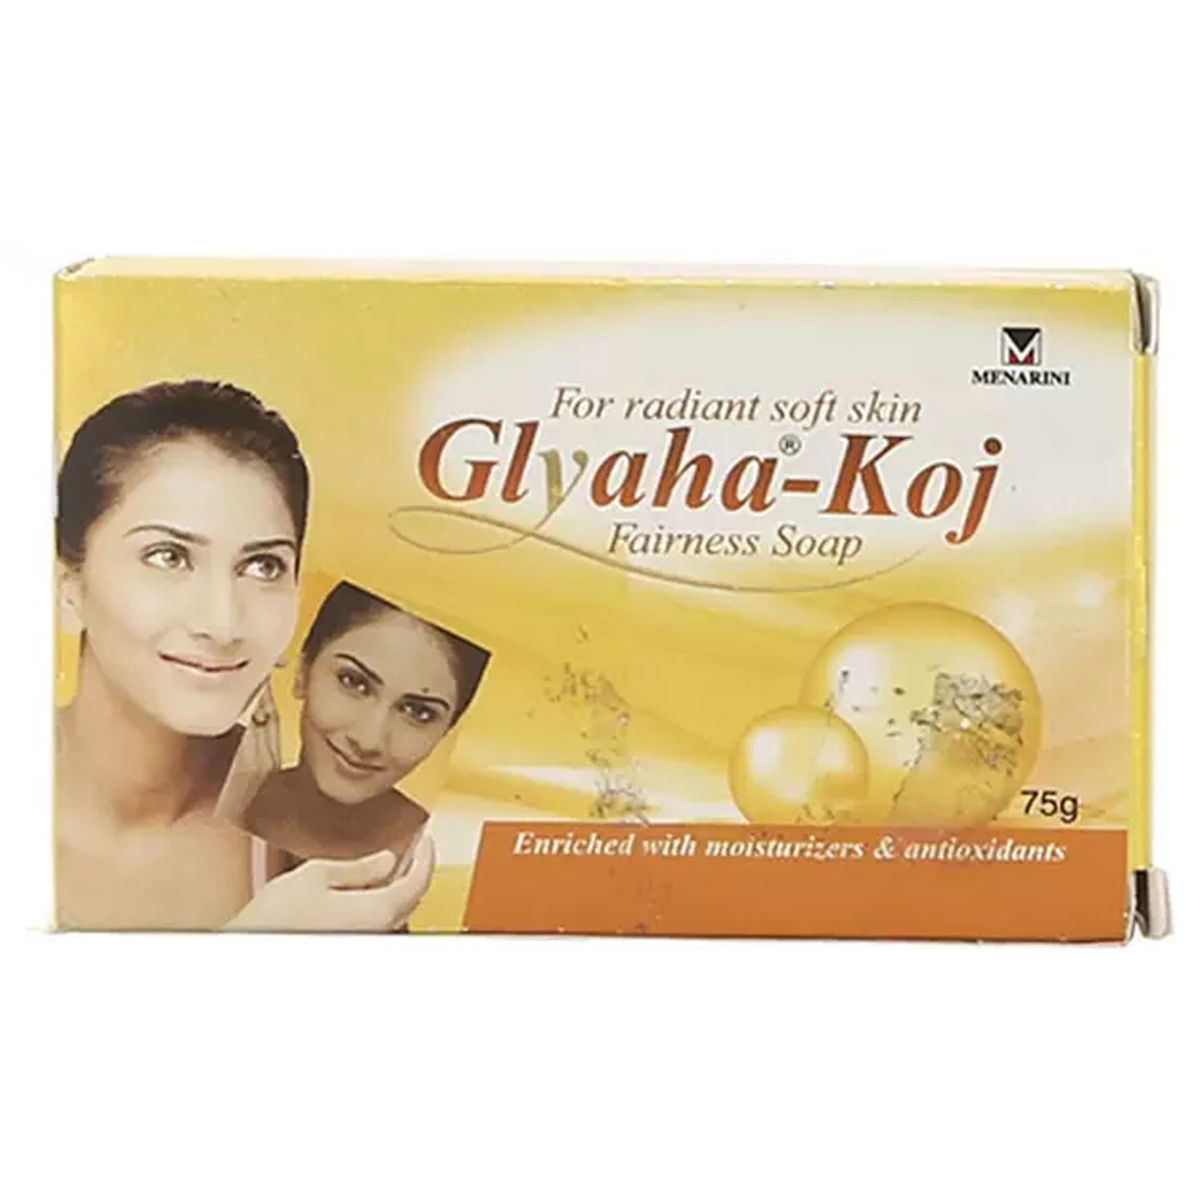 Buy Glyaha-Koj Fairness Soap, 75 gm Online